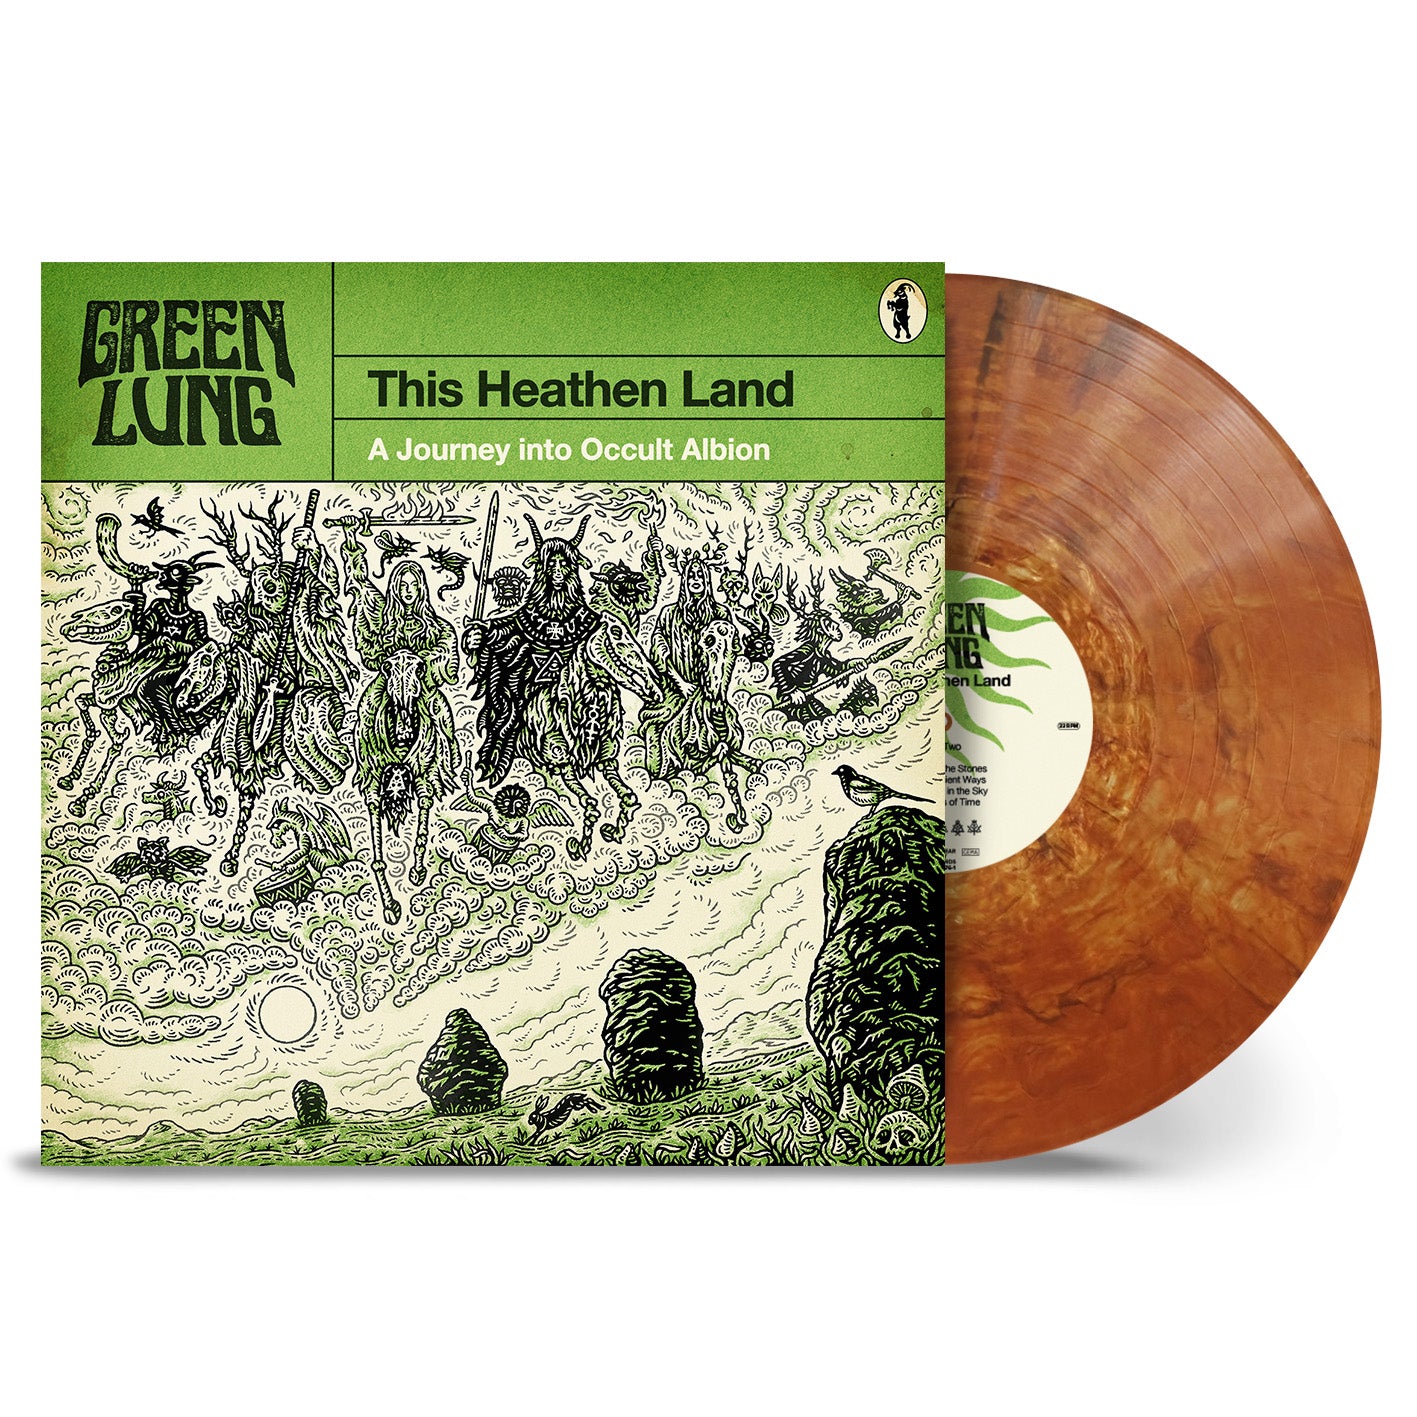 Green Lung "This Heathen Land" Amber Smoke Vinyl - PRE-ORDER